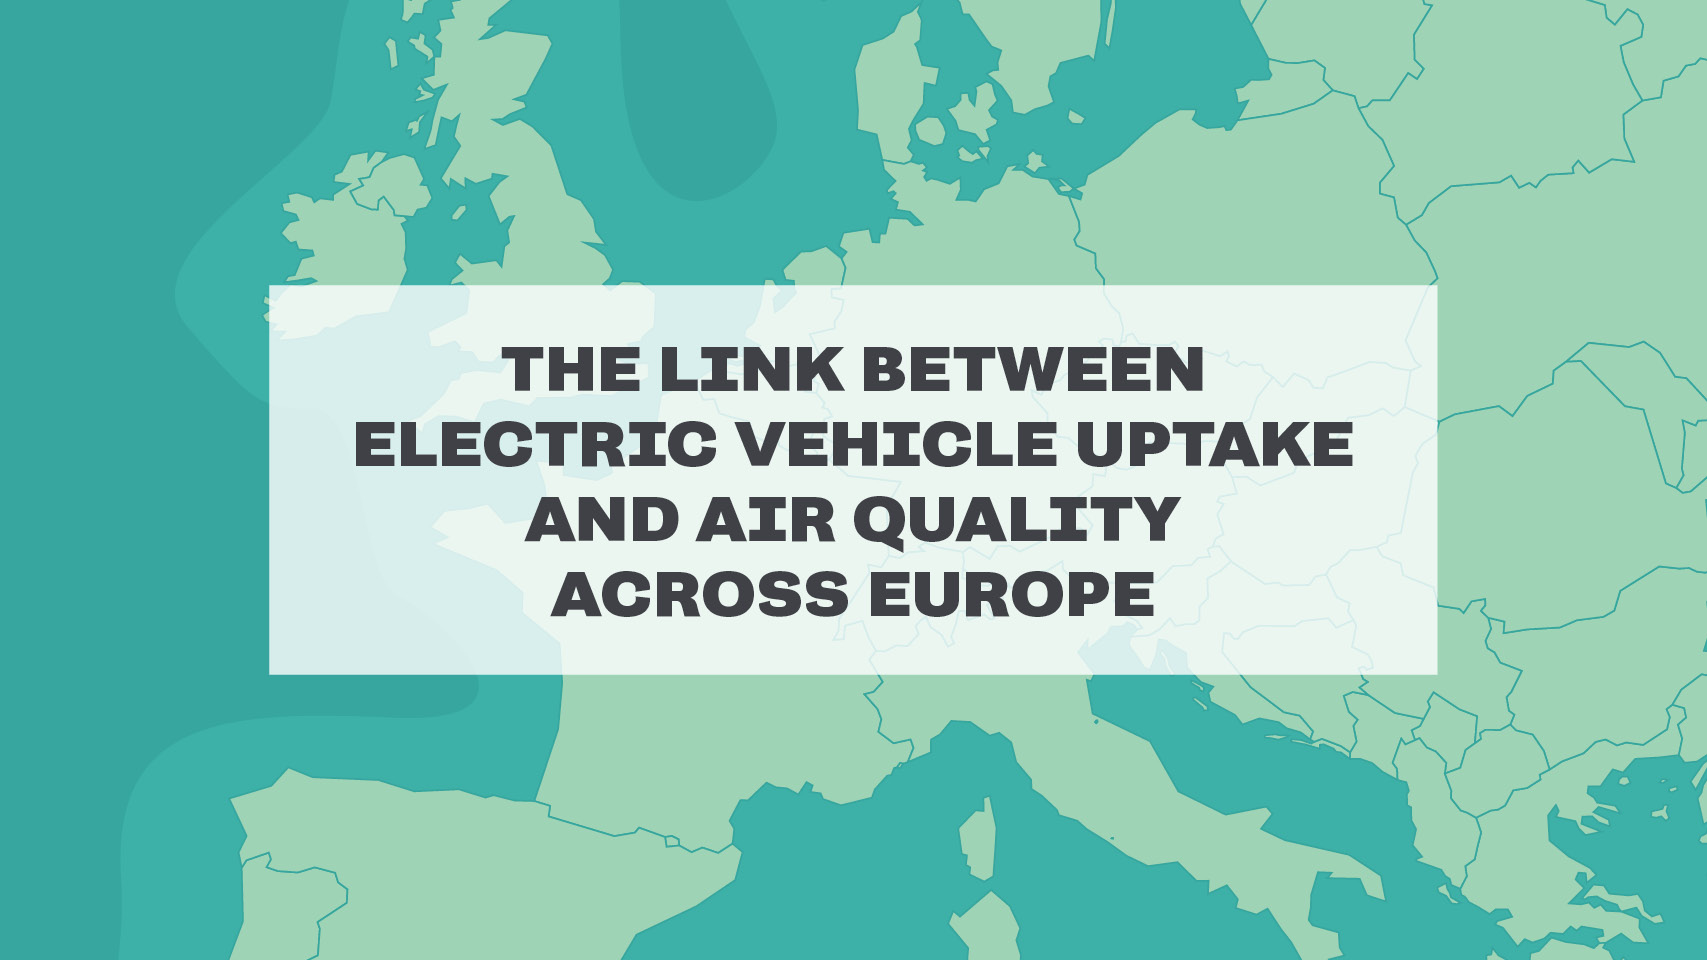 The link between ev uptake & air quality across europe